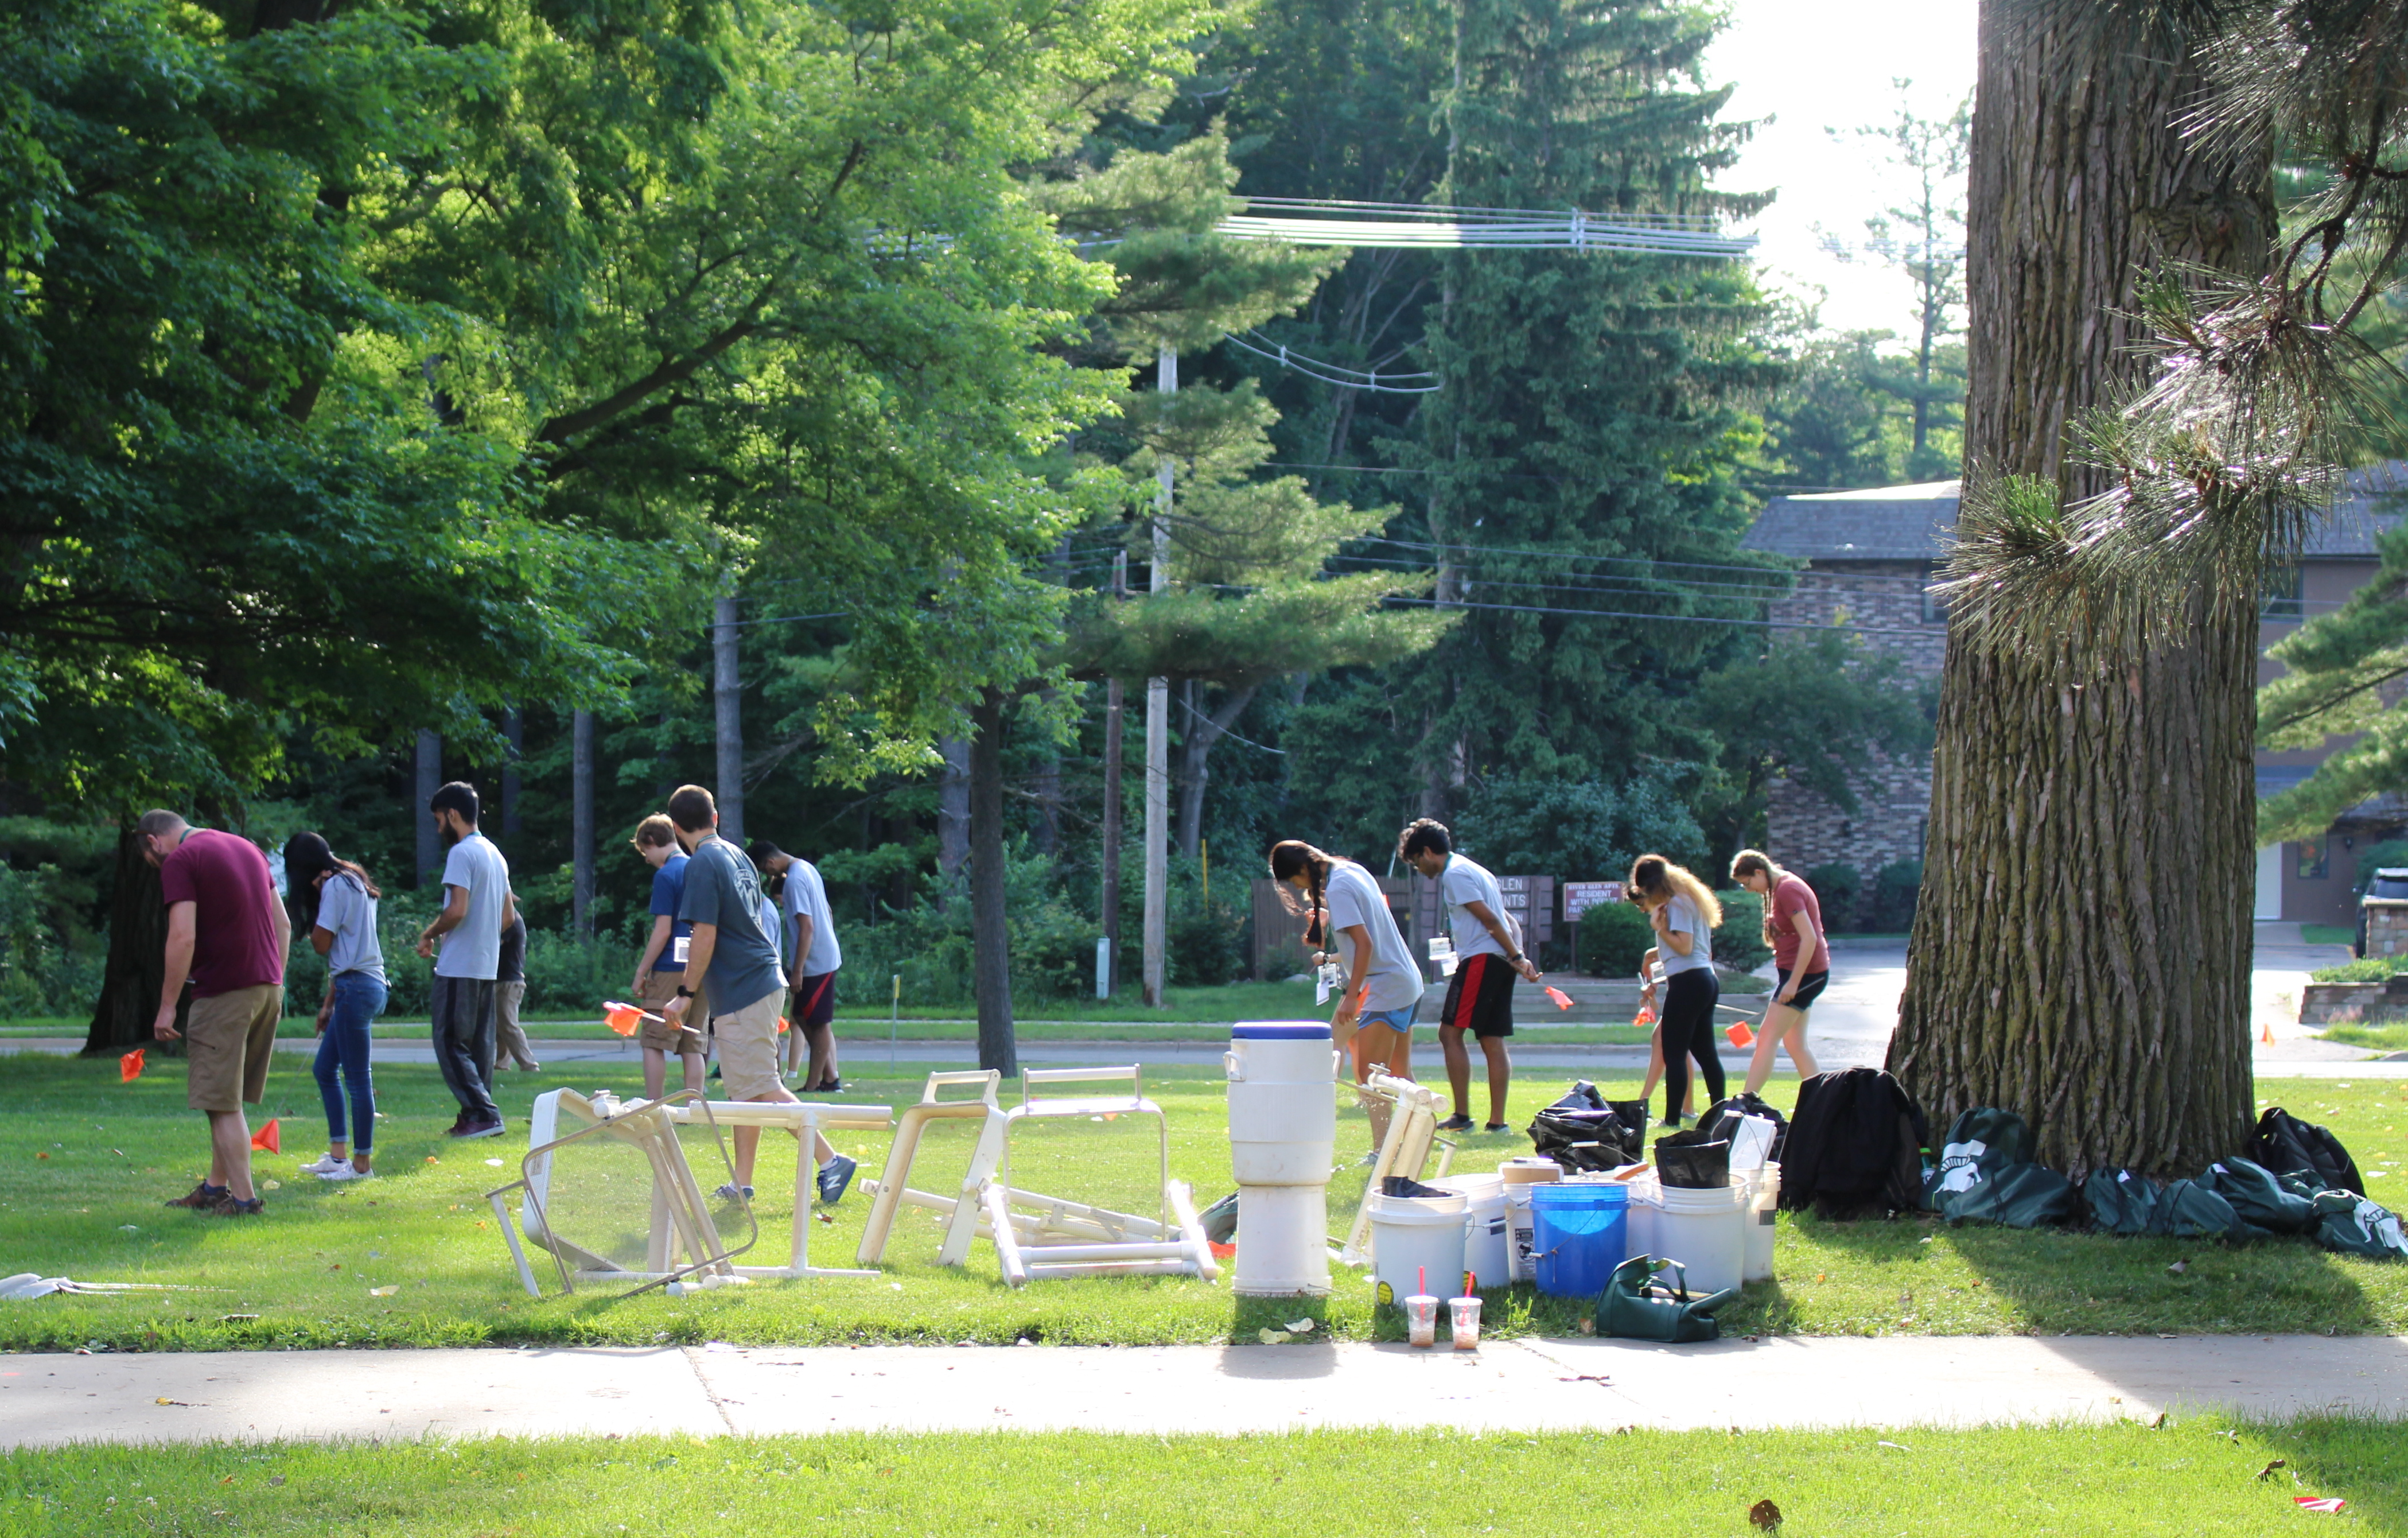 Eleven undergraduates walking a mowed field to find artifacts